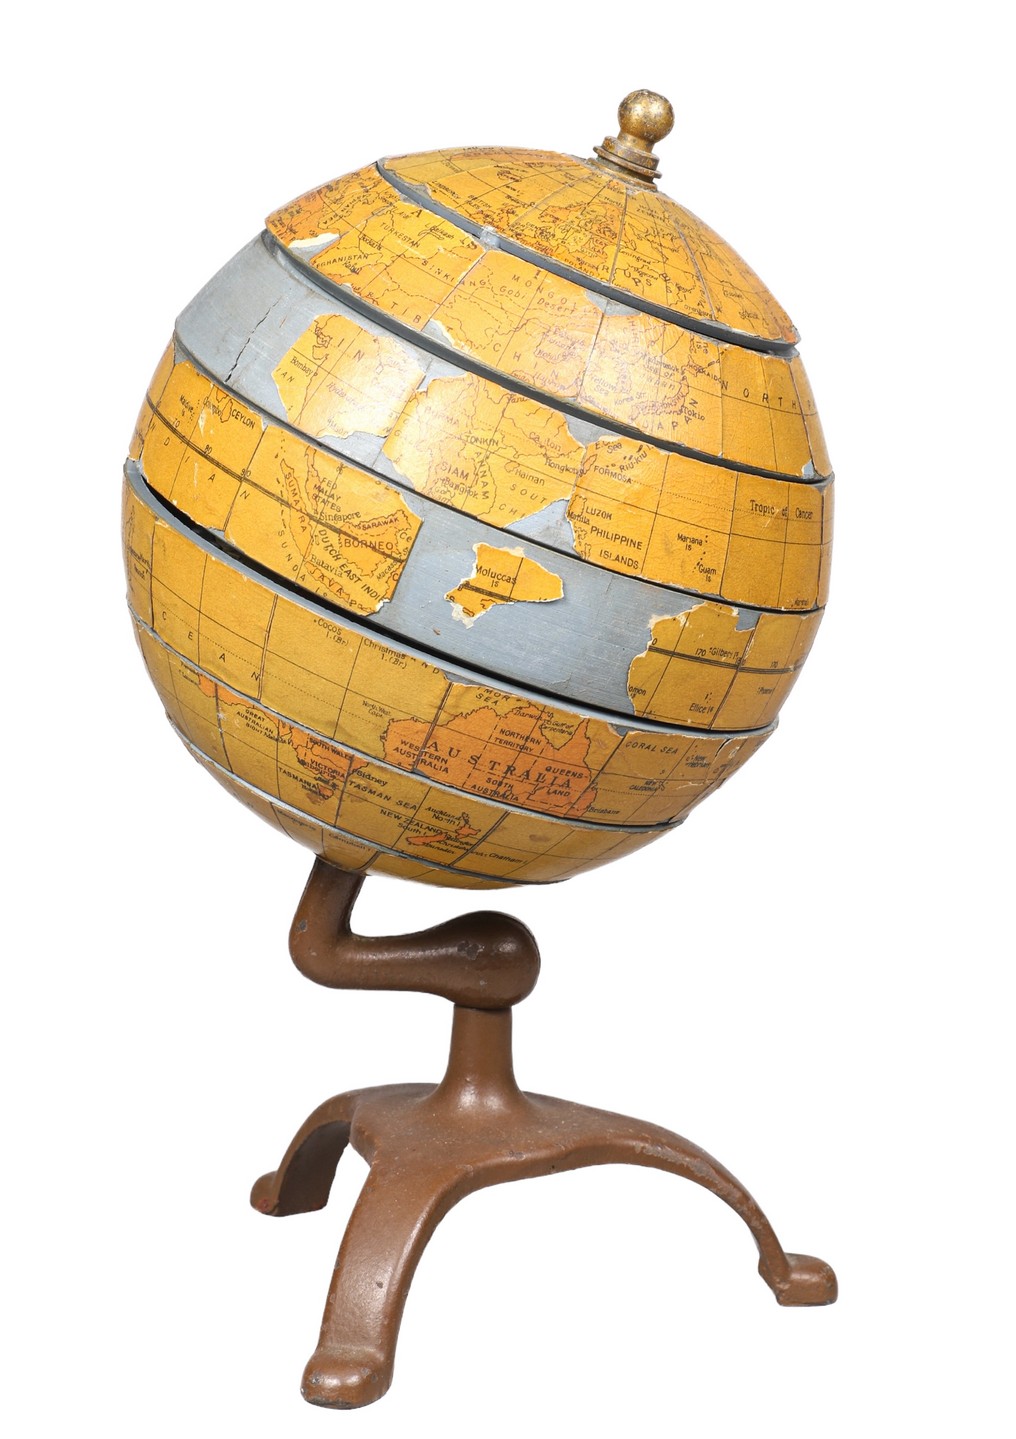 1927 Geographic puzzle globe, Terrestrial